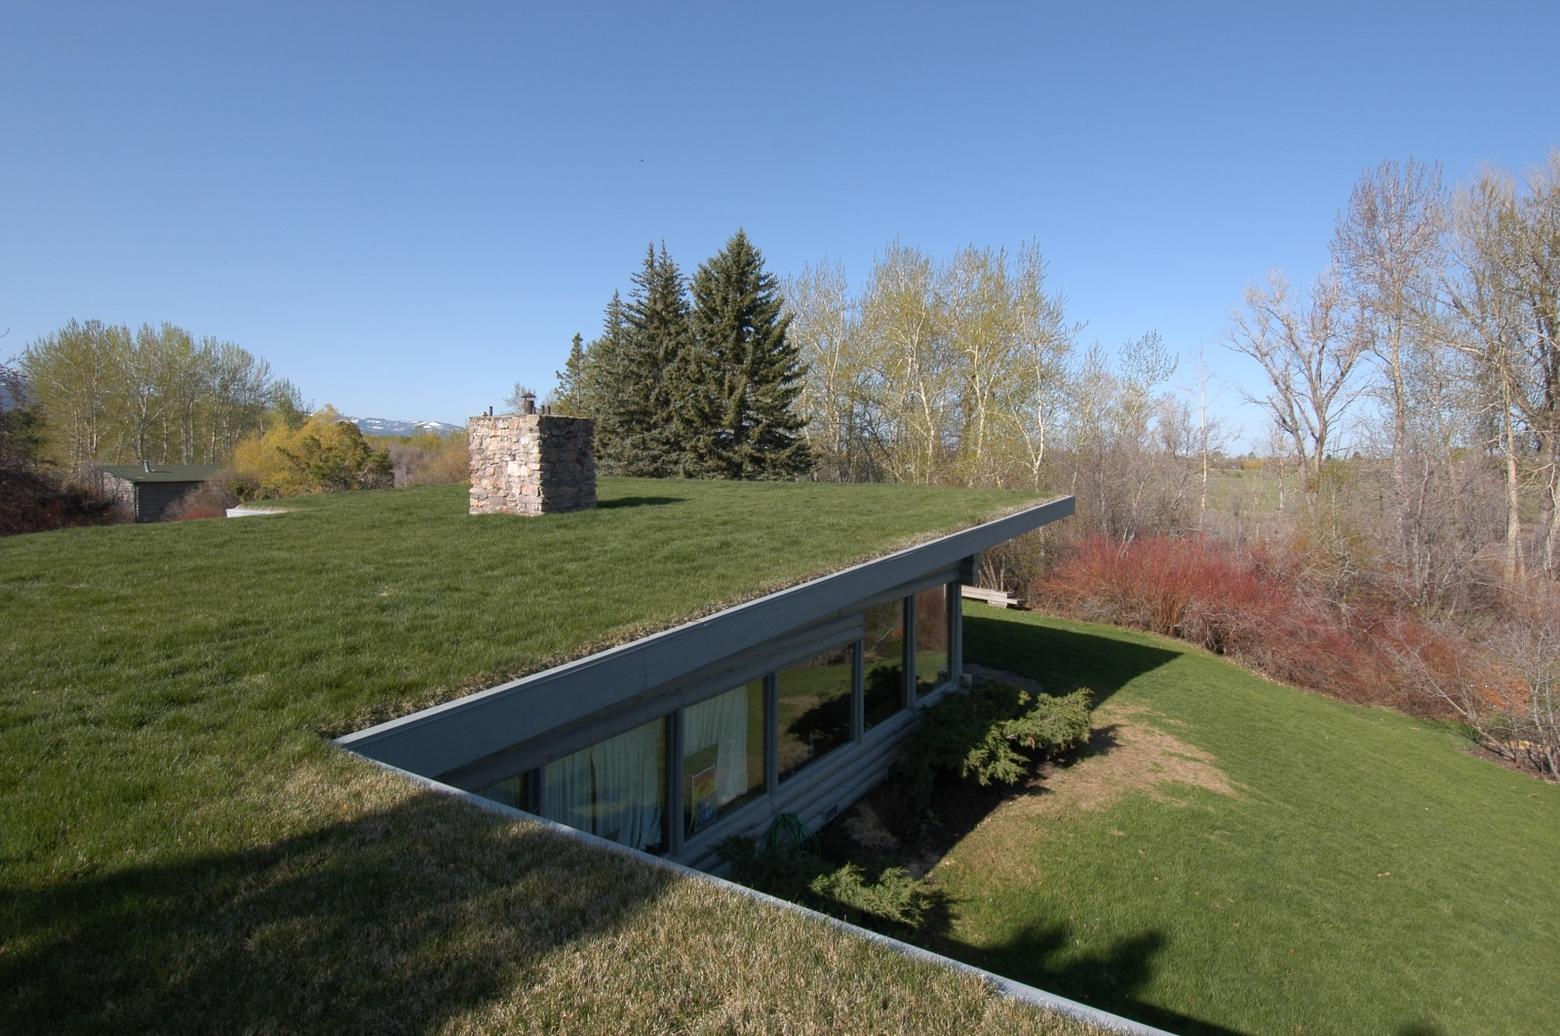 A sod-roofed home designed by architect Richard Neutra.  Photo courtesy Joe Valerio